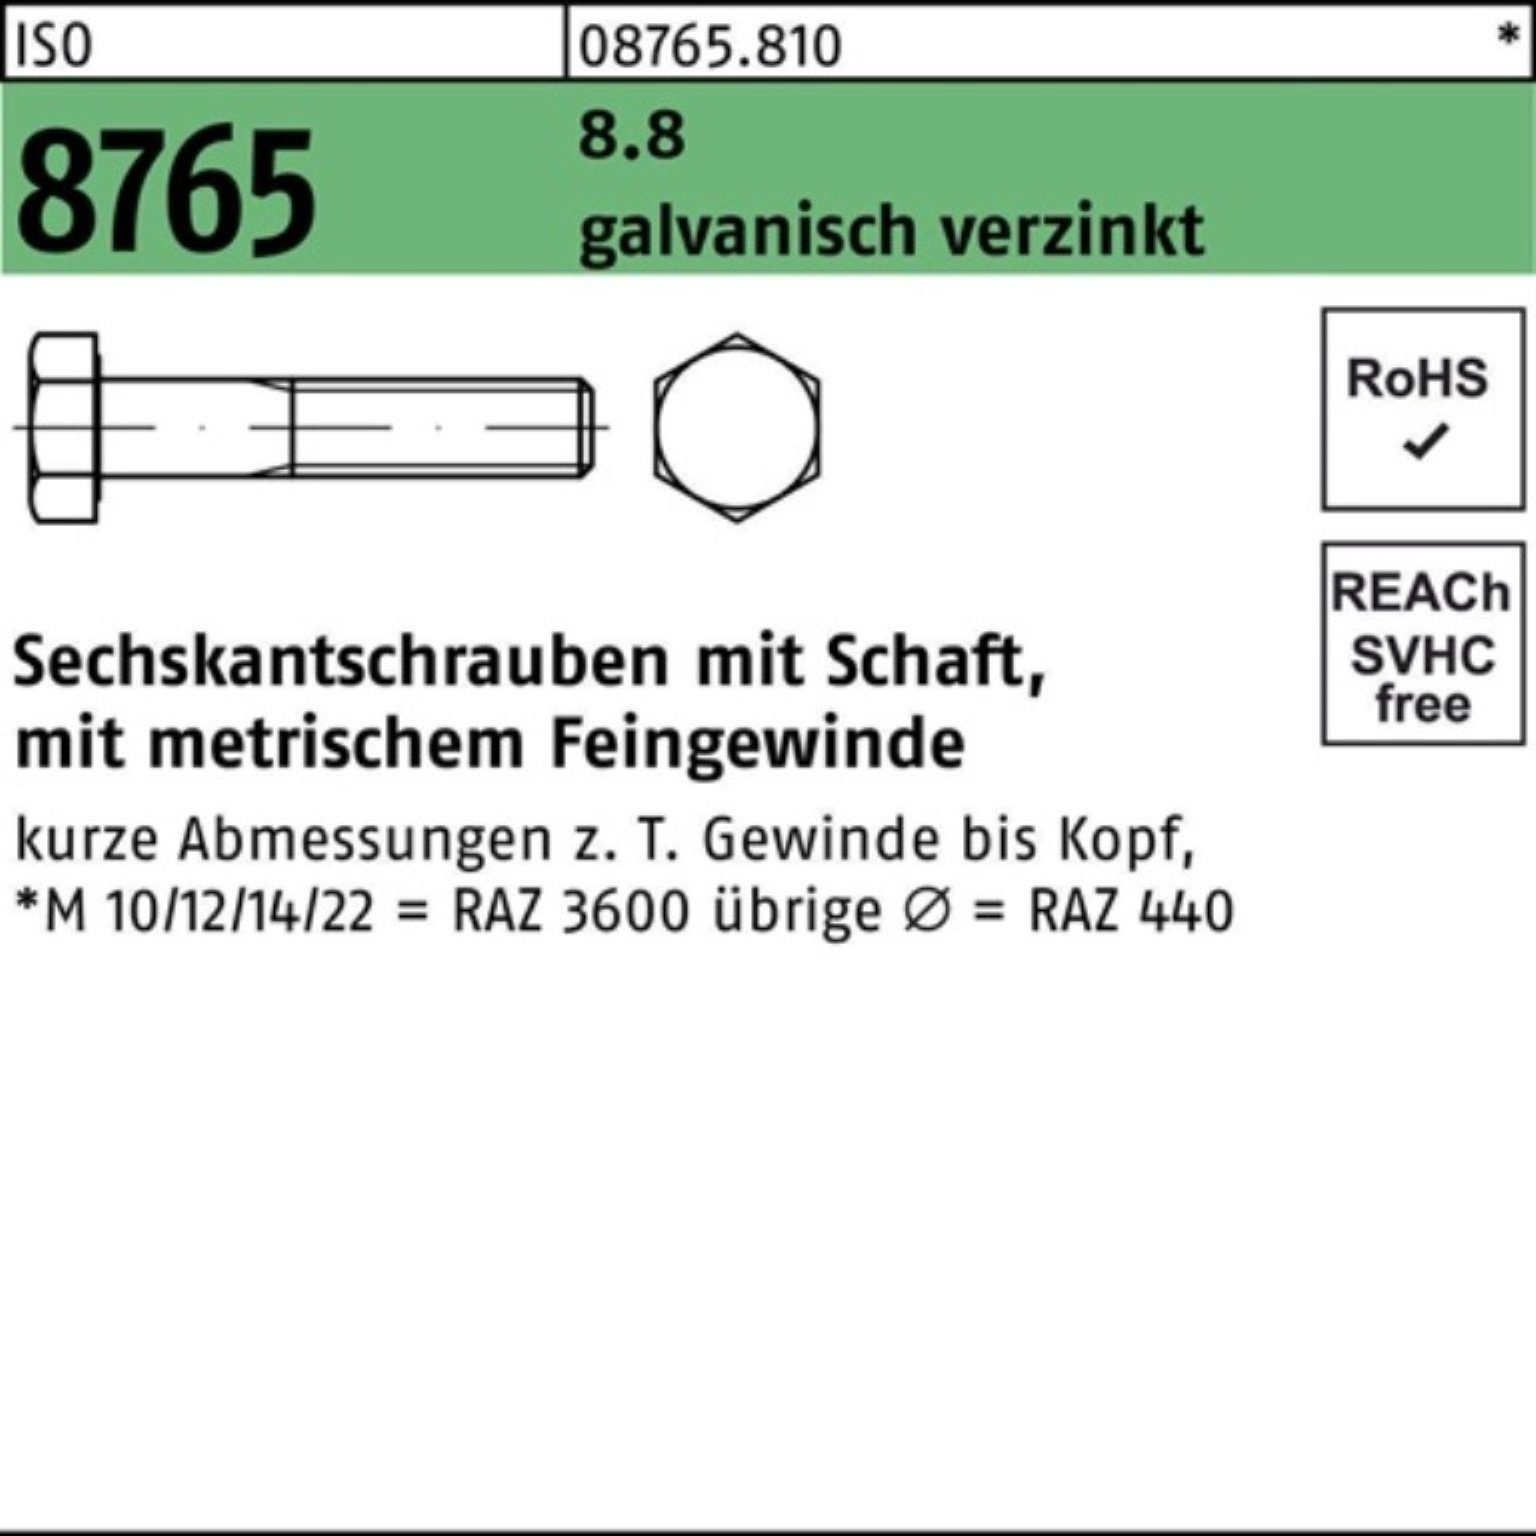 Sechskantschraube galv.verz Reyher Schaft 8.8 100er Pack M12x1,5x130 Sechskantschraube 8765 ISO